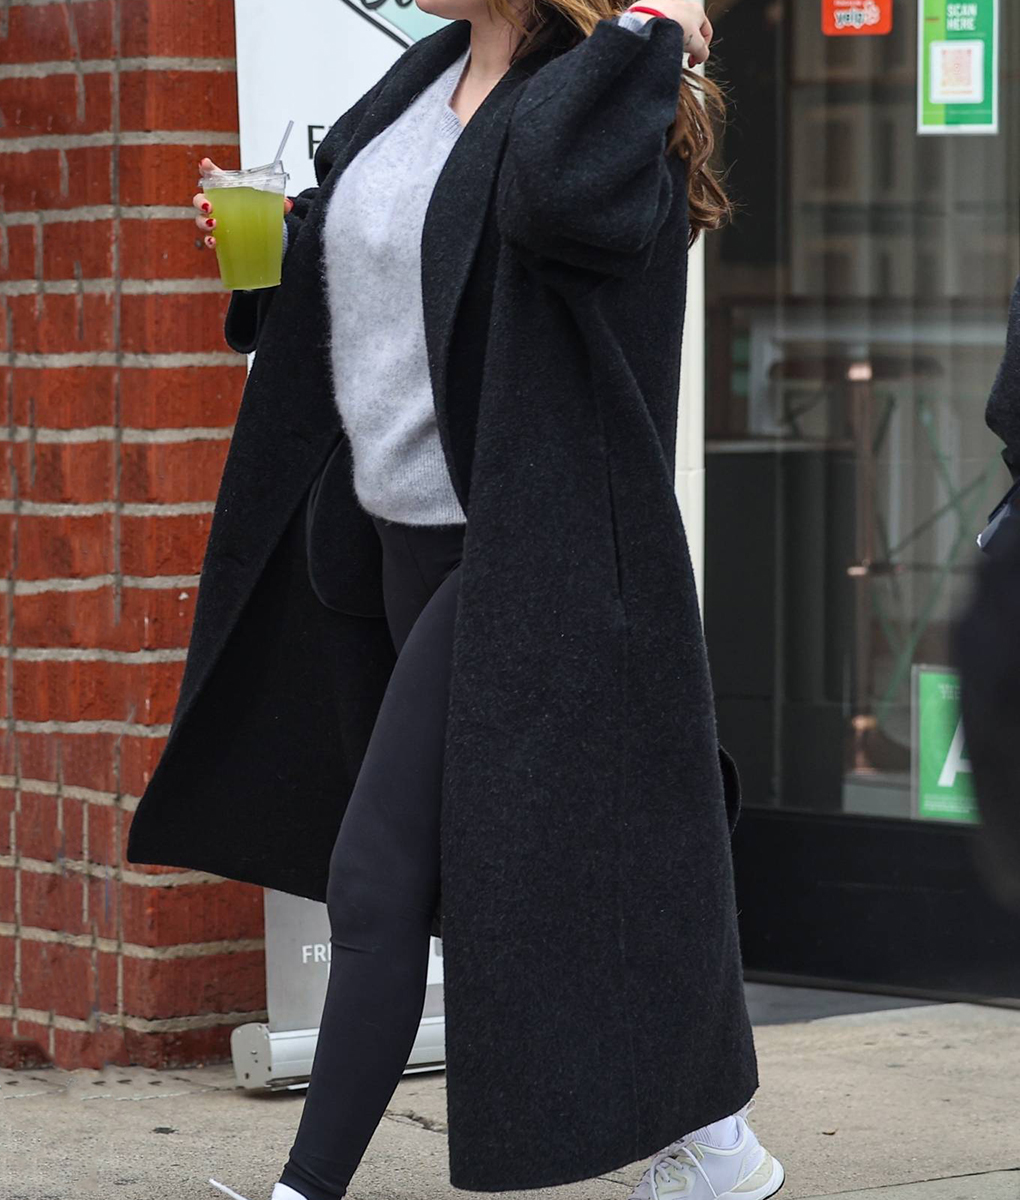 Selena Gomez Long Black Coat (3)